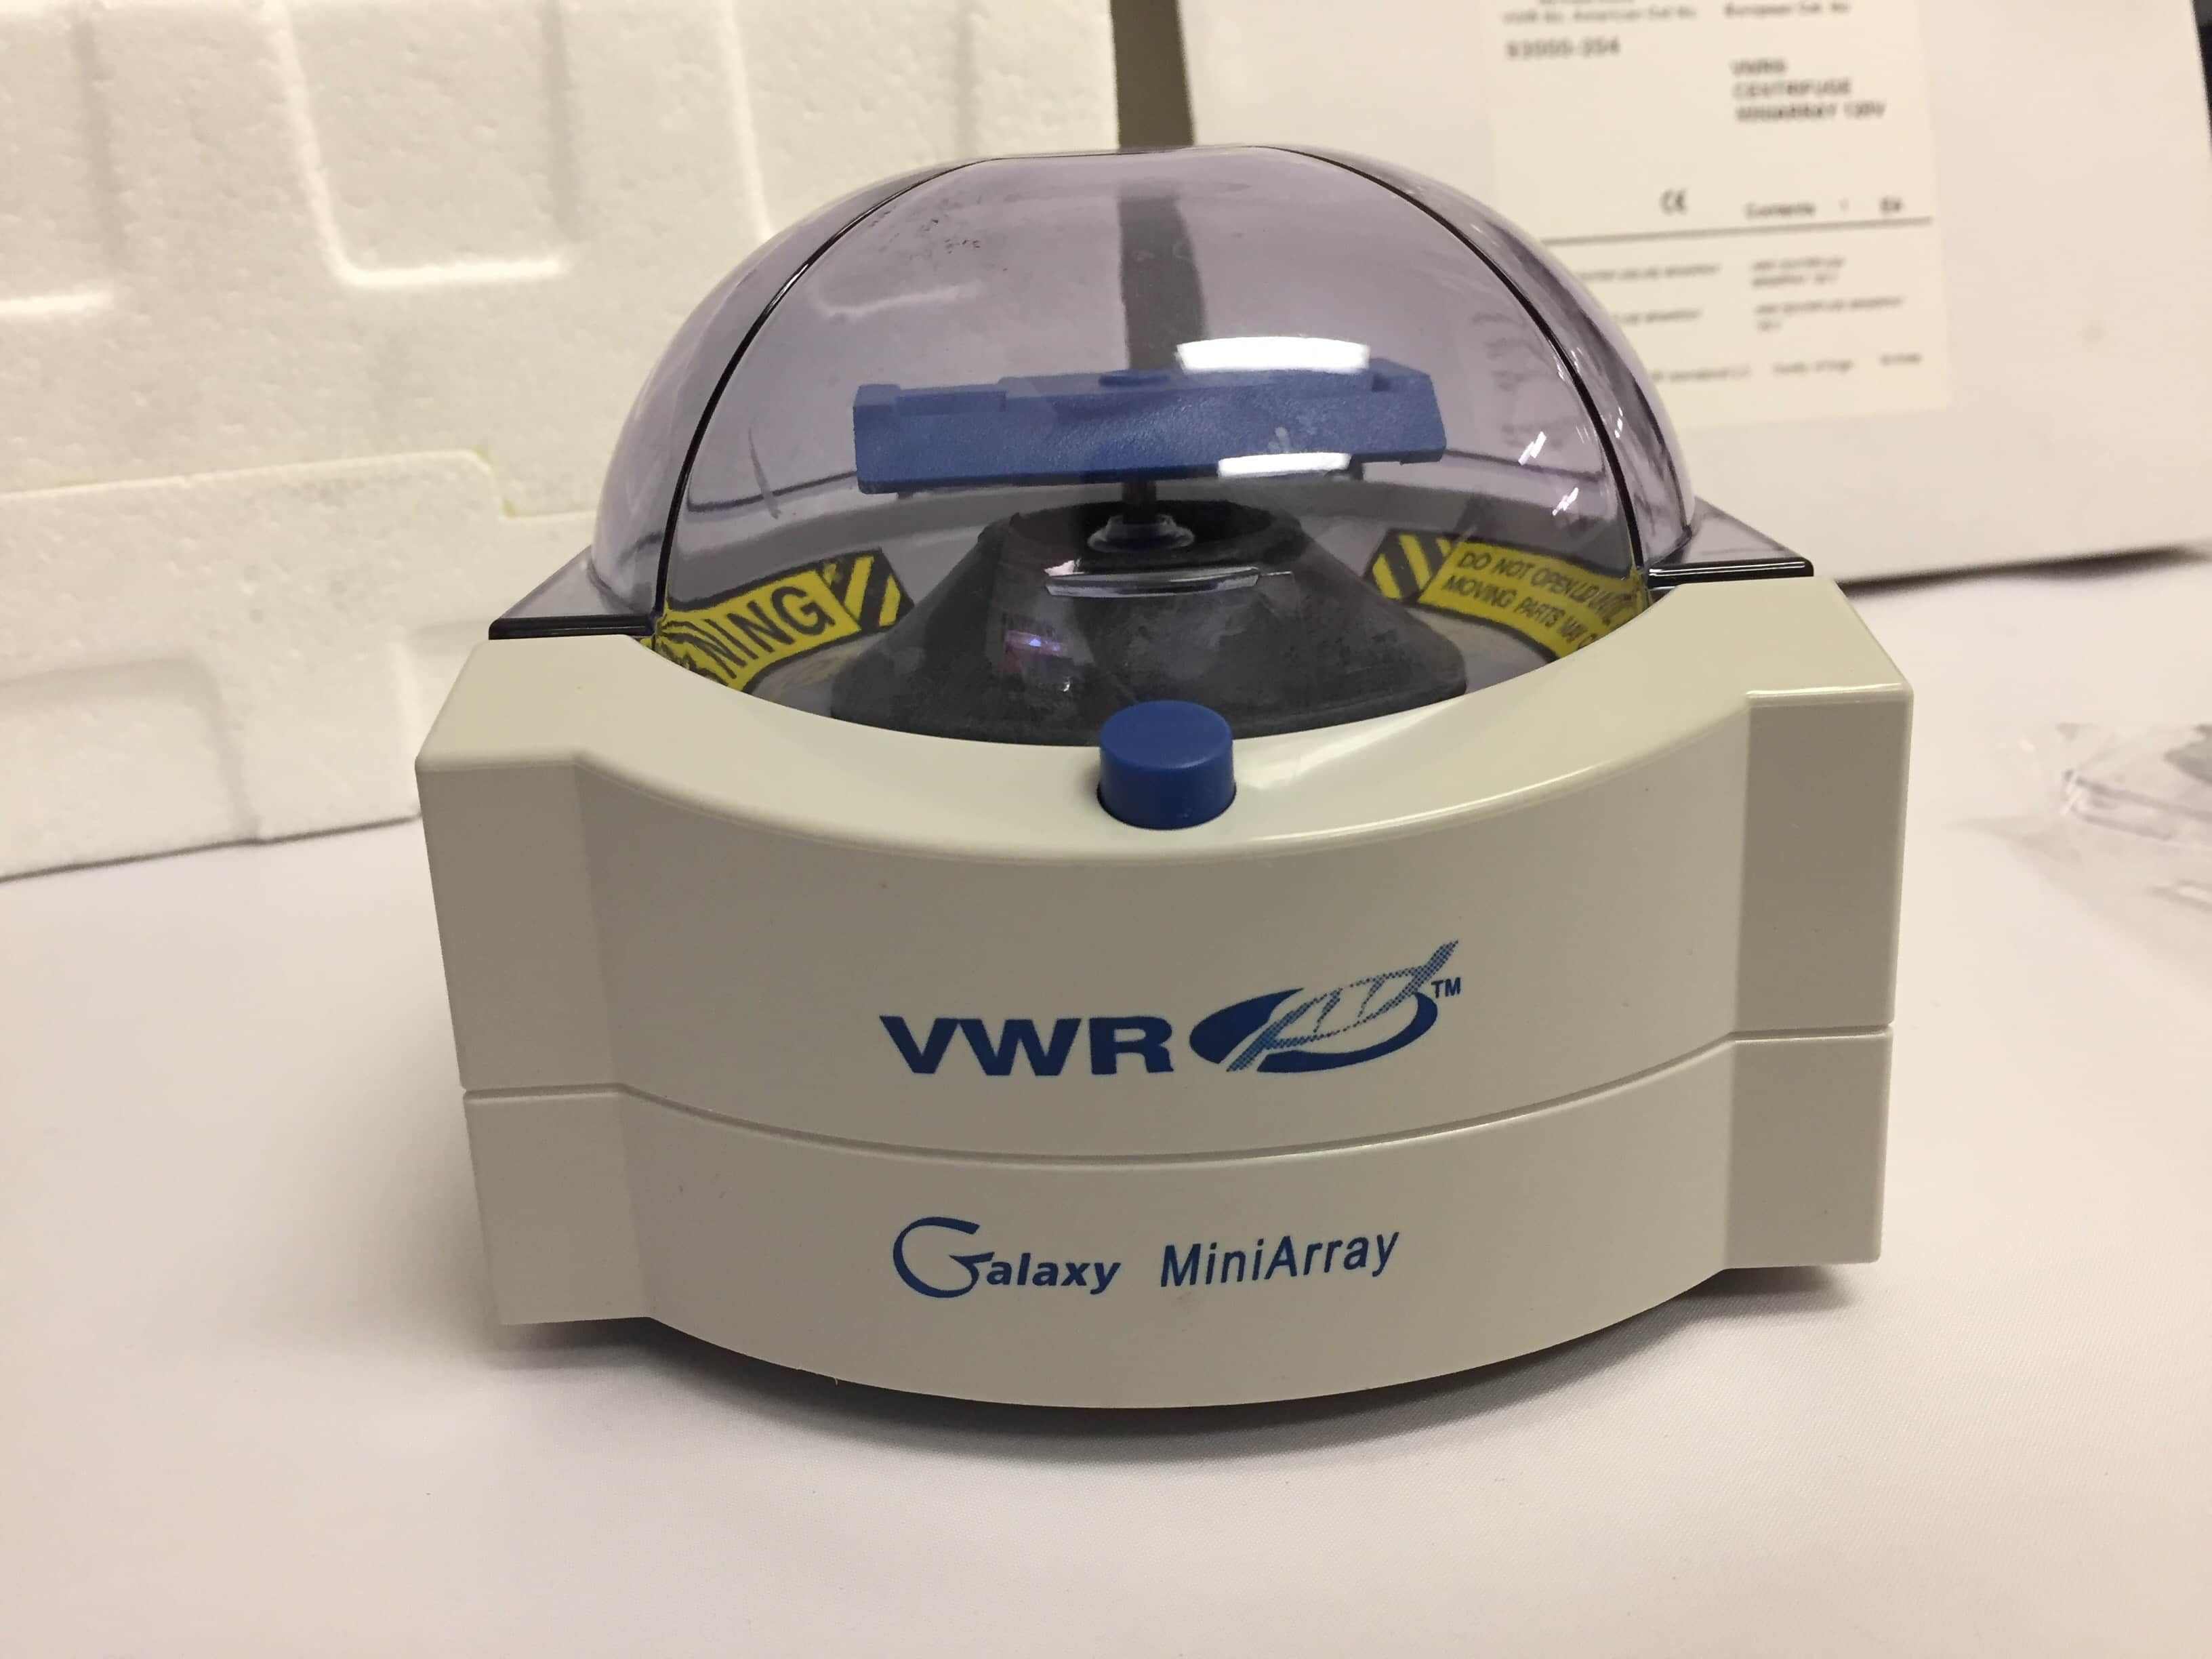 VWR Galaxy MiniStar Centrifuge Miniarray 120 V, Model 93000-204